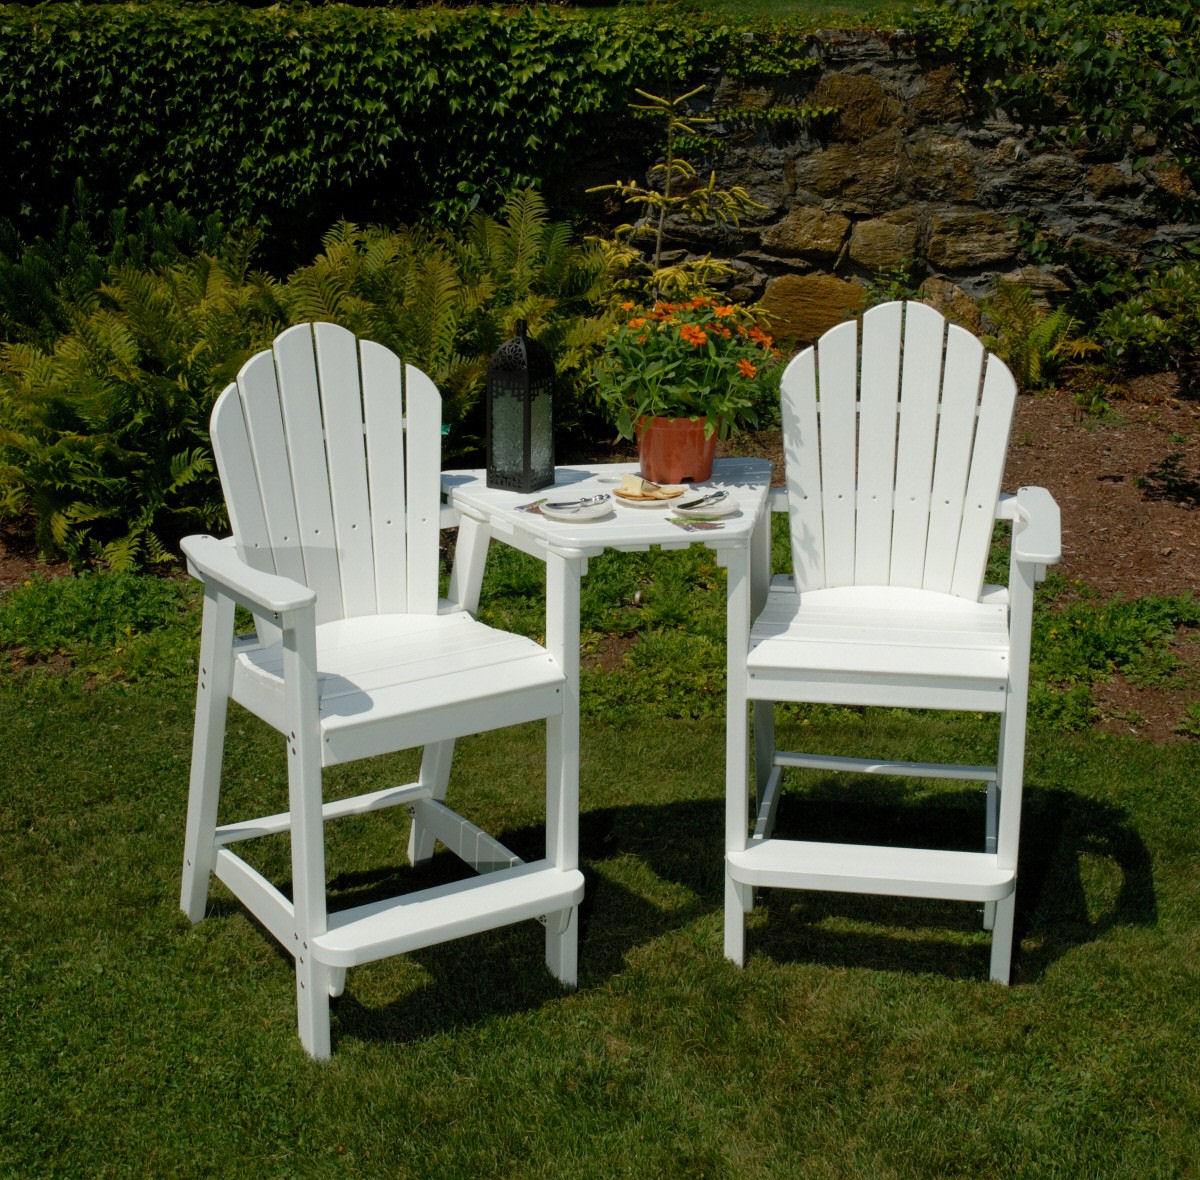 Classic Adirondack Bar Chair On Sale Now At Atlantic Patio